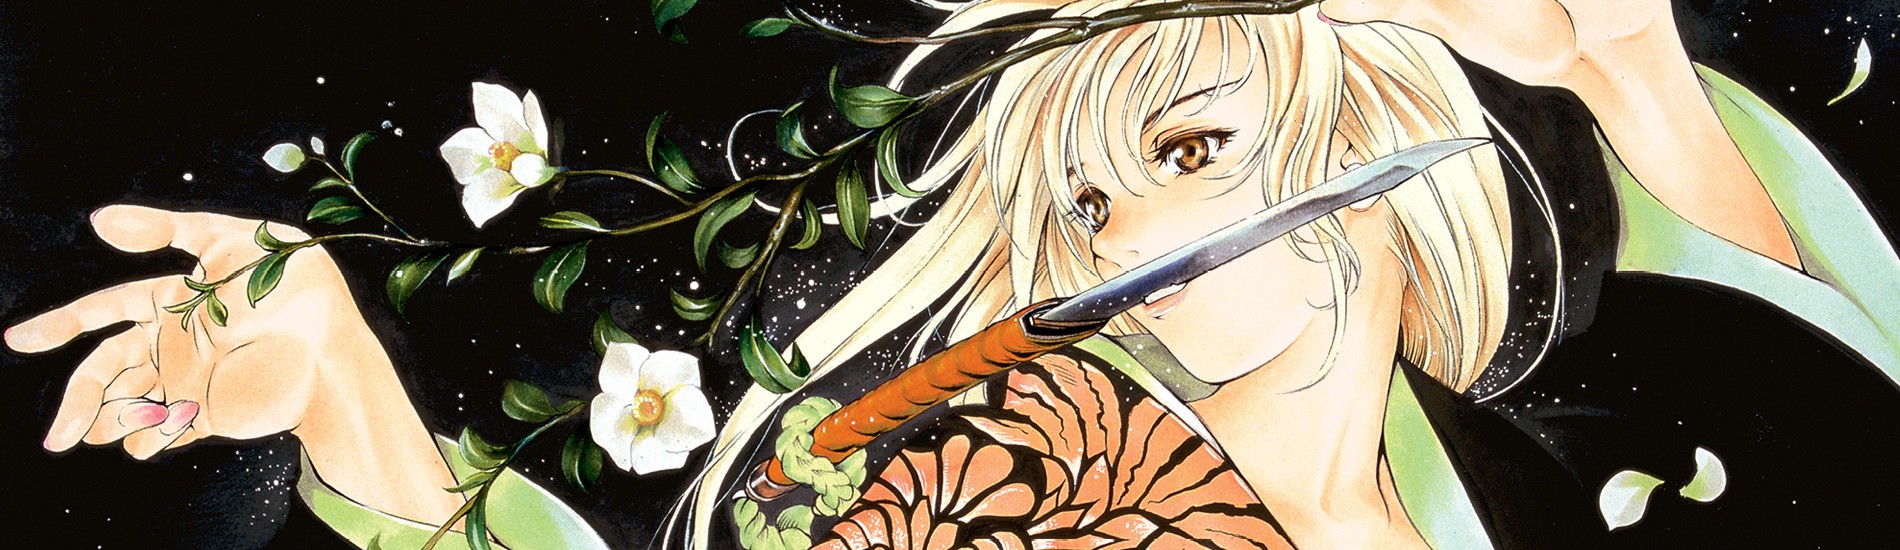 Tenjho Tenge, Shigurui Manga Ending in Japan - News - Anime News